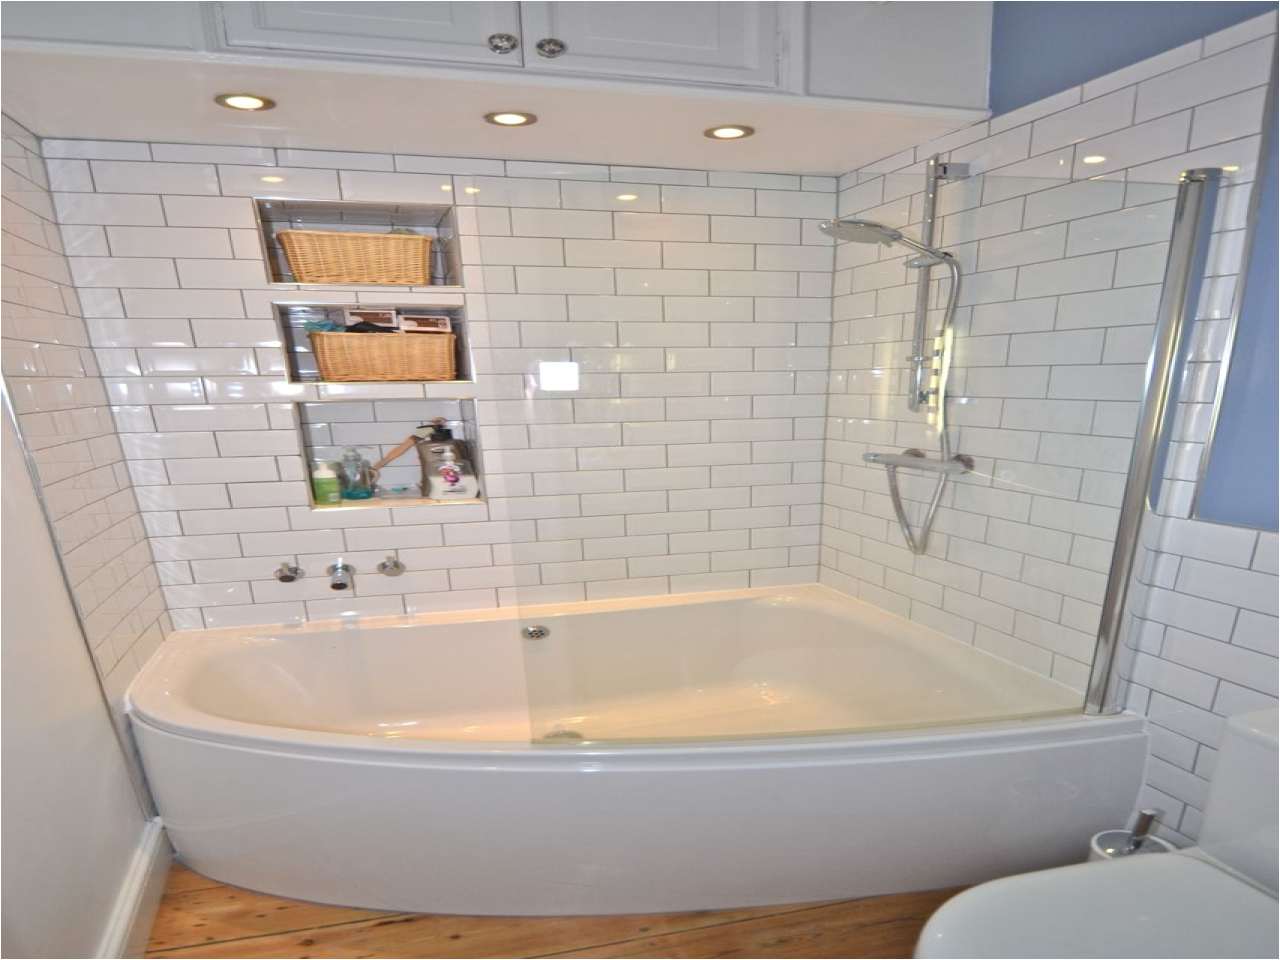 cozy menards bathtubs for elegant bathroom design ideas